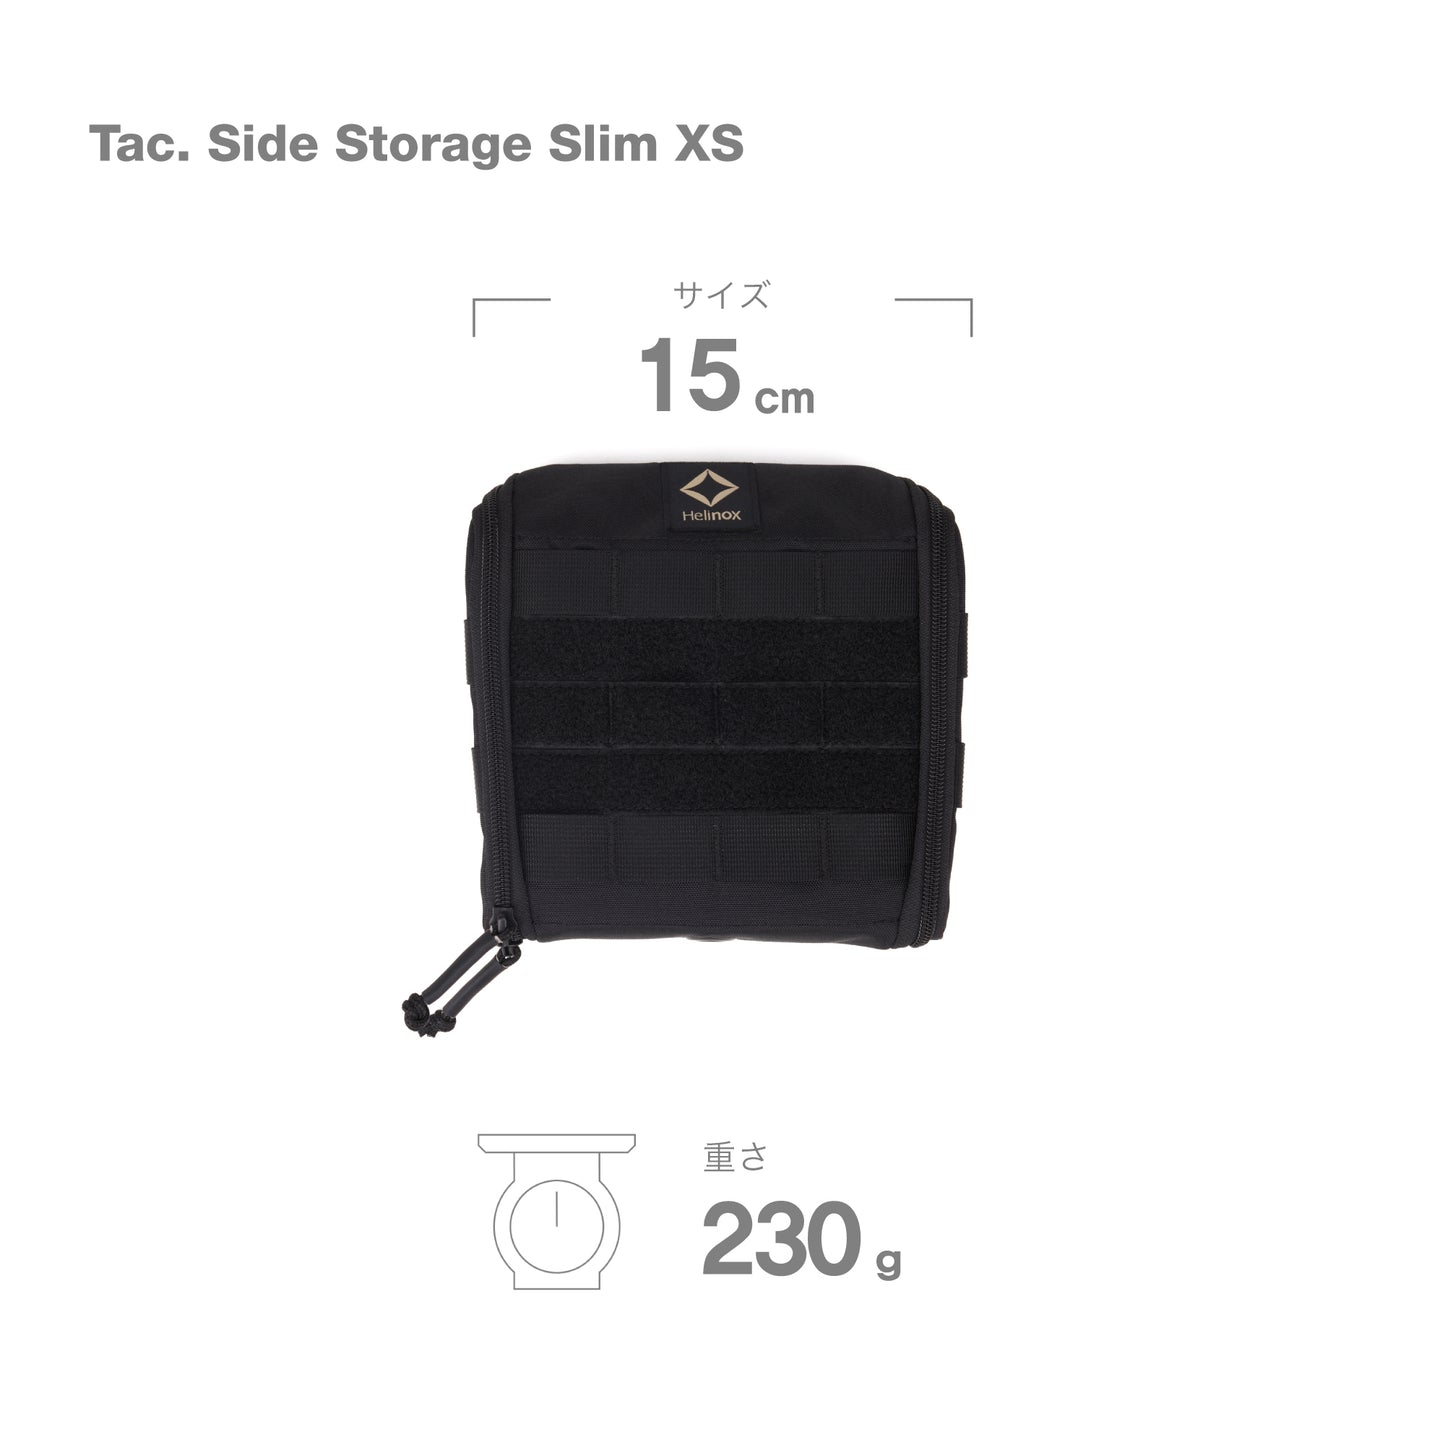 Tac. Side Storage Slim XS - Black